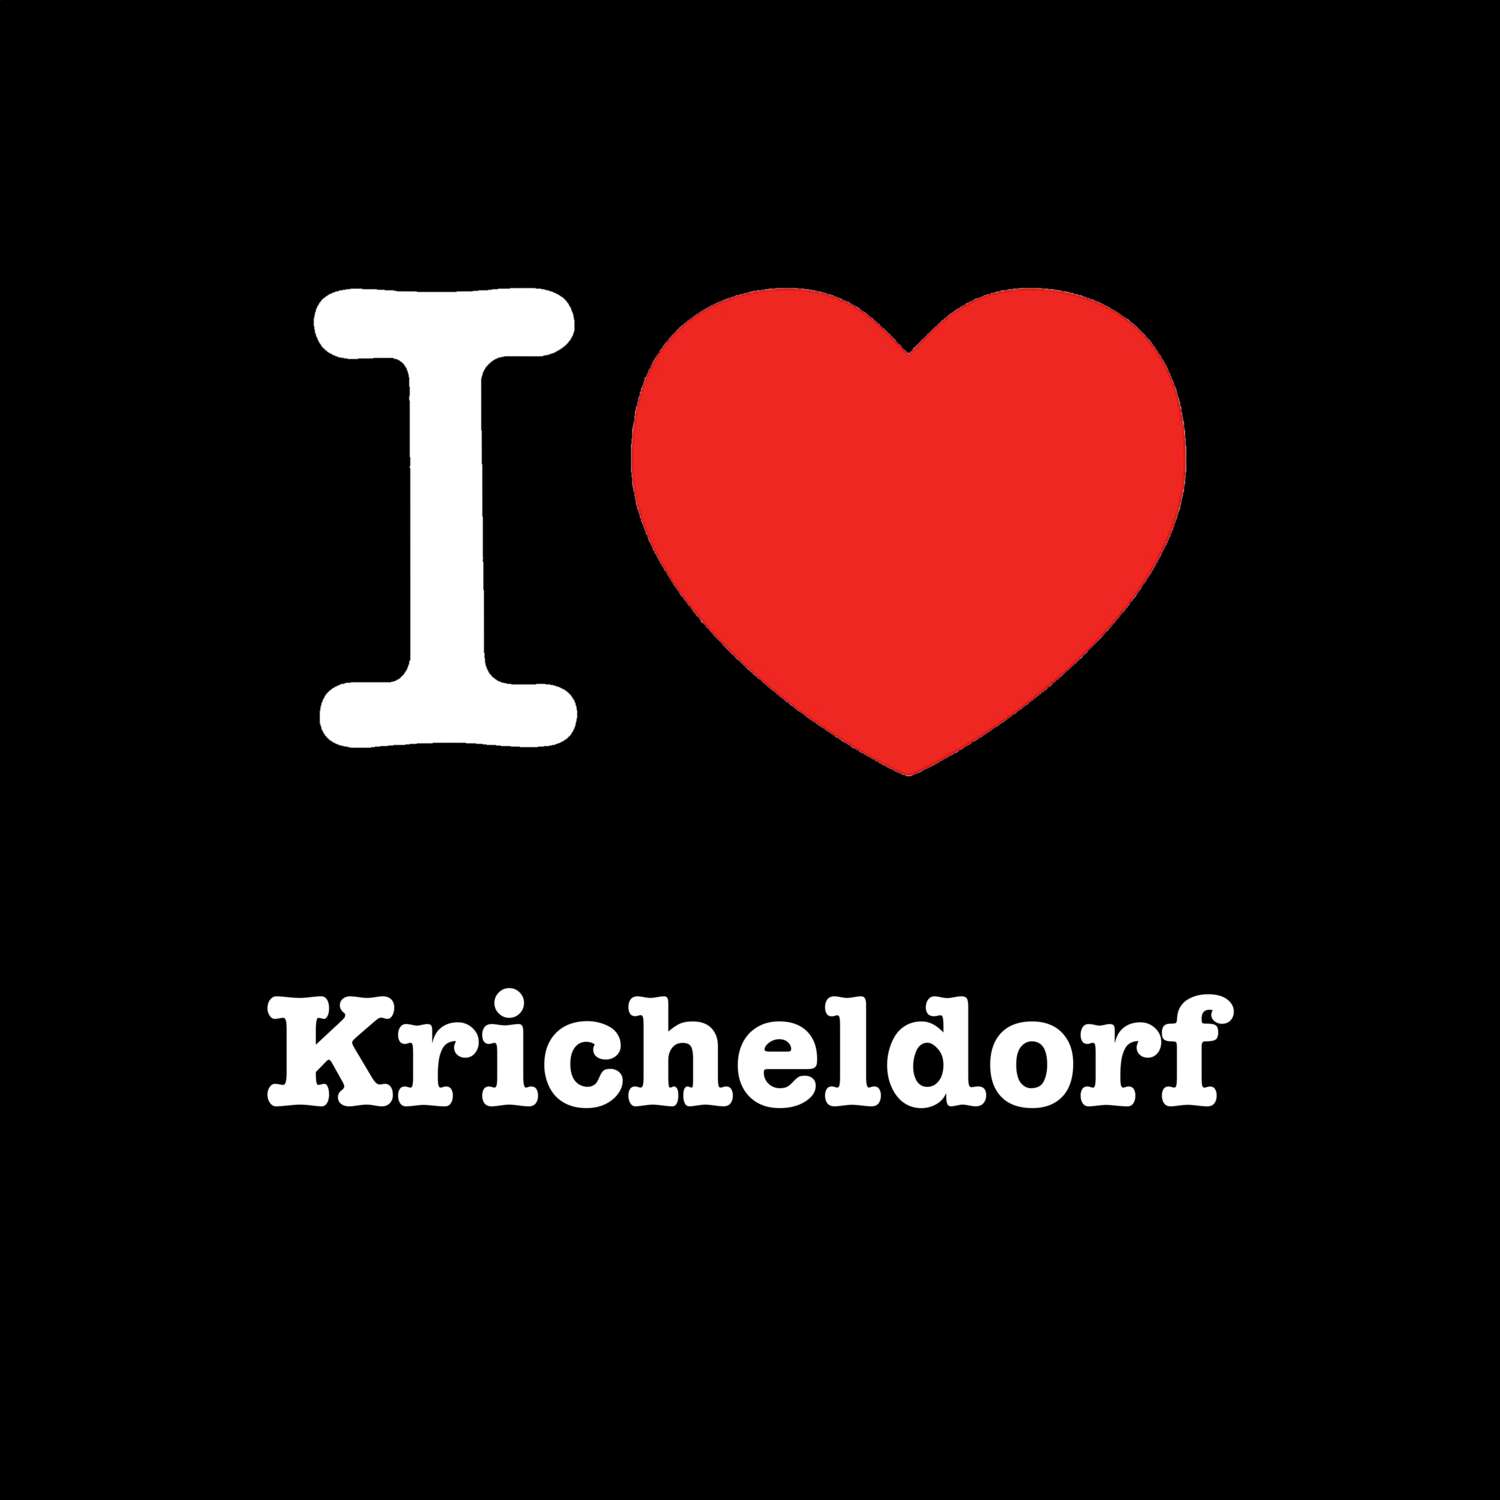 Kricheldorf T-Shirt »I love«